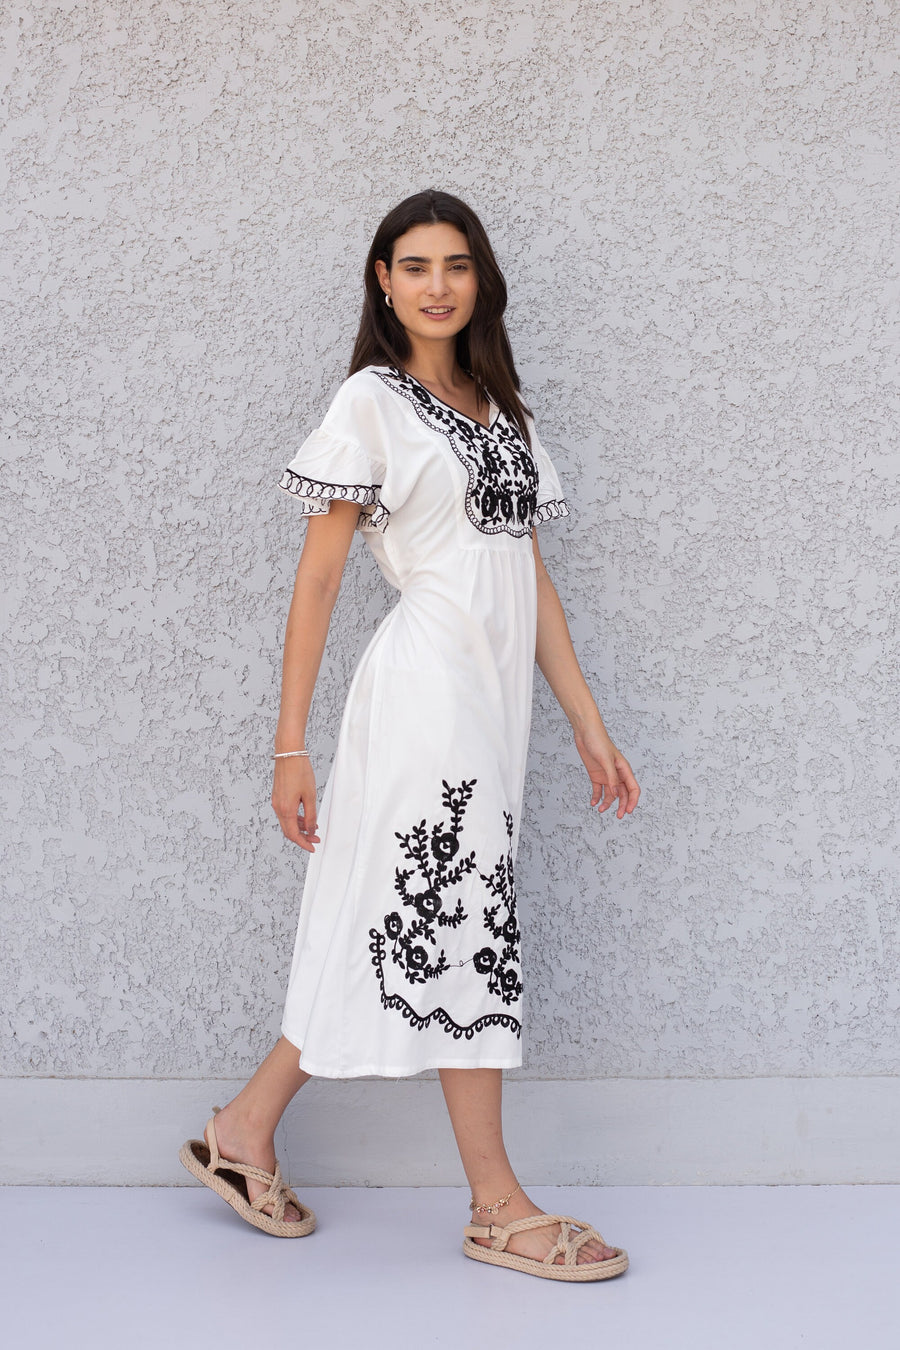 White cotton Tunic dress, embroidered kaftan dress, short tunic kaftan, cotton embroidered tunic dress, Summer tunic, vacation tunic, caftan